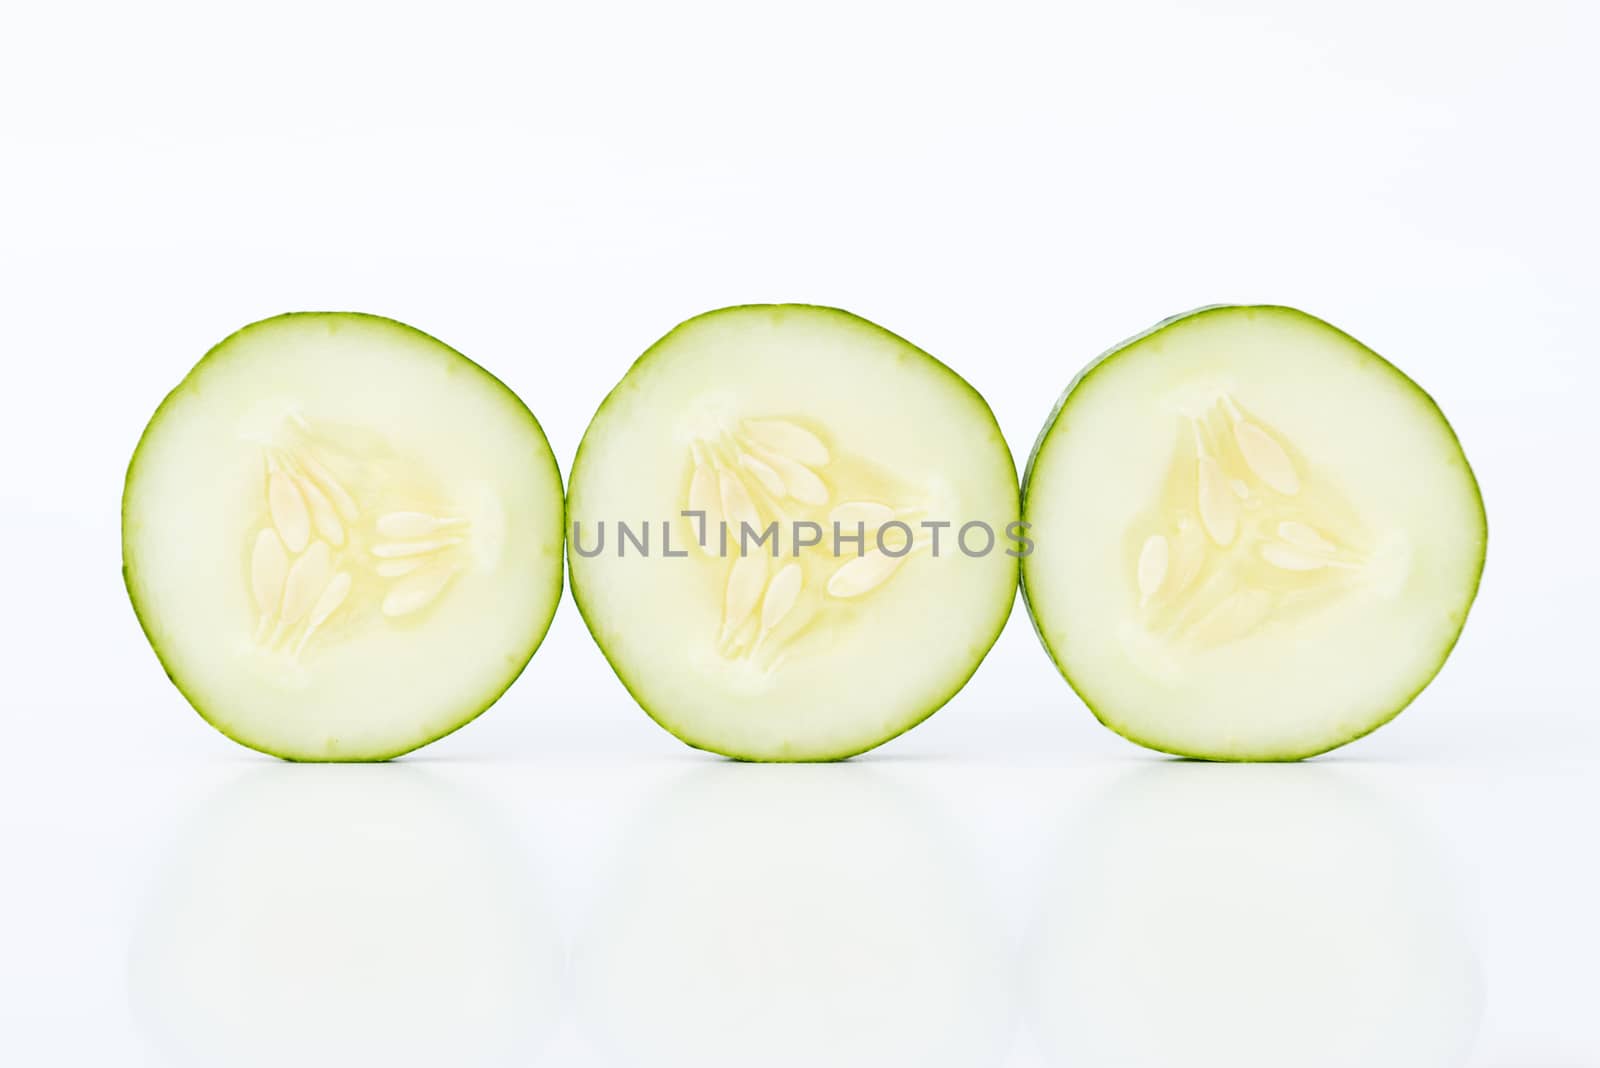 Cucumber slices by Kenishirotie